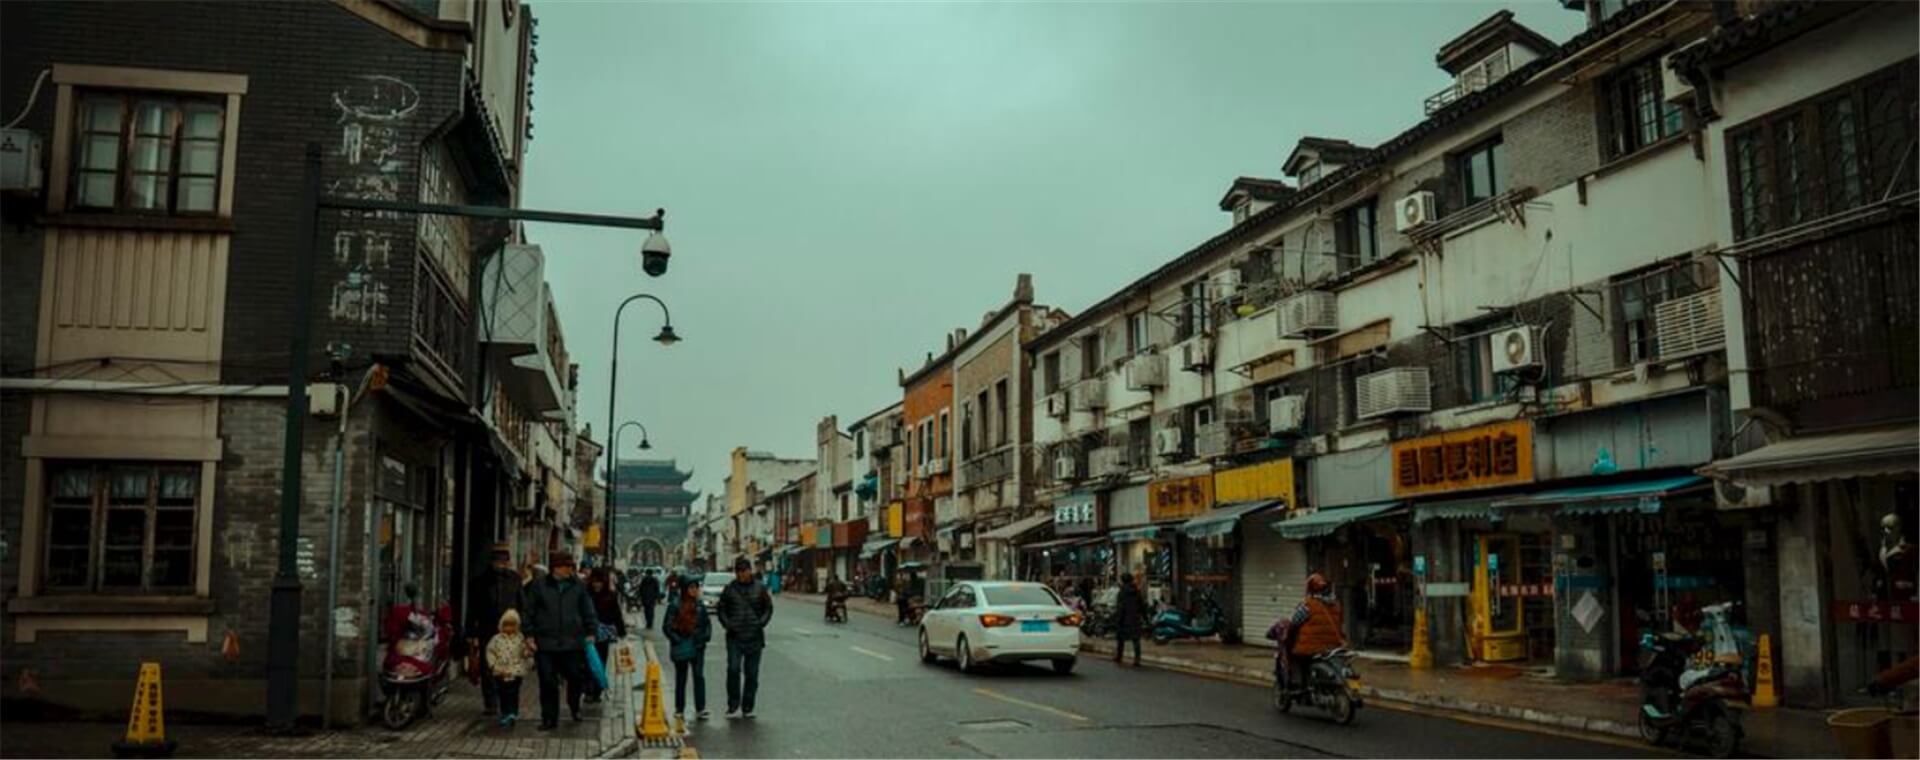 ordinary suzhou-banner